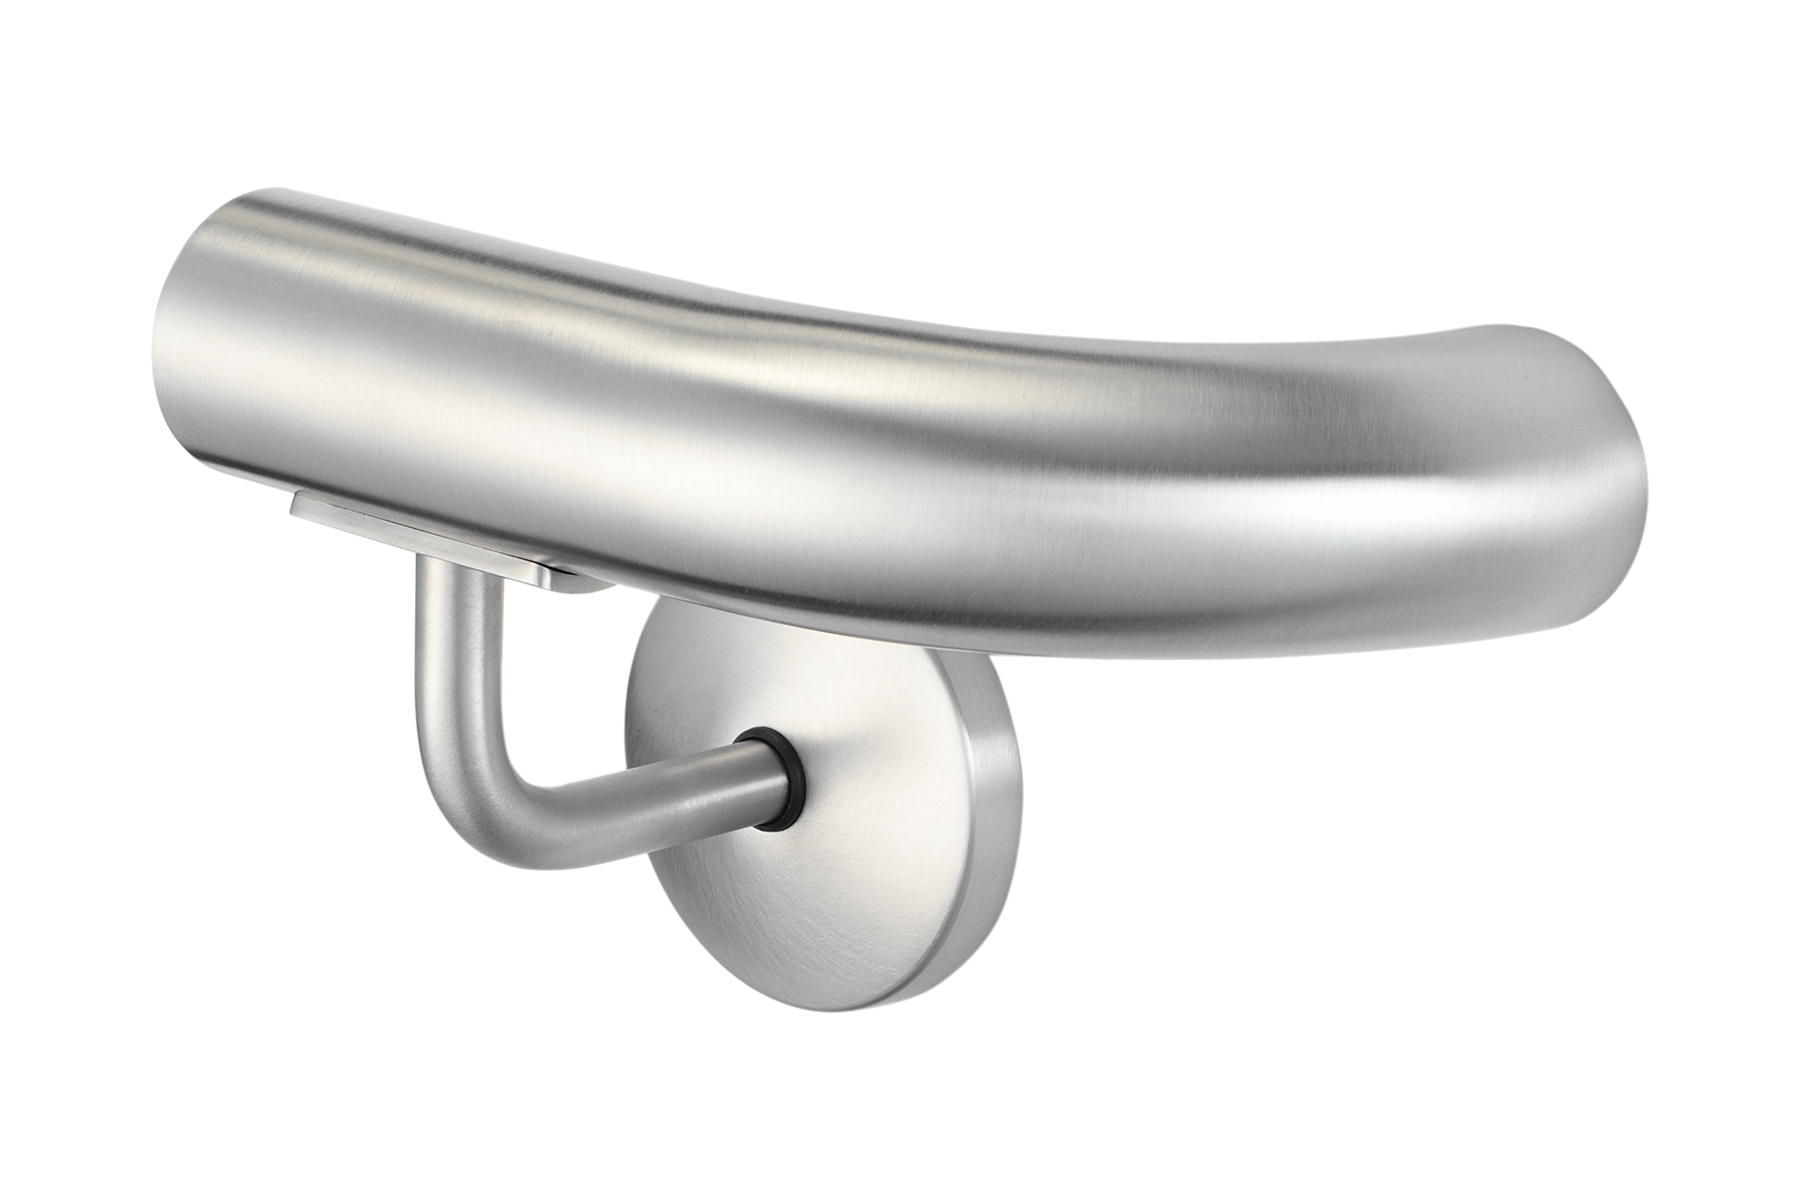 KWS Handrail support 4625 in finish 82 (stainless steel, matte)